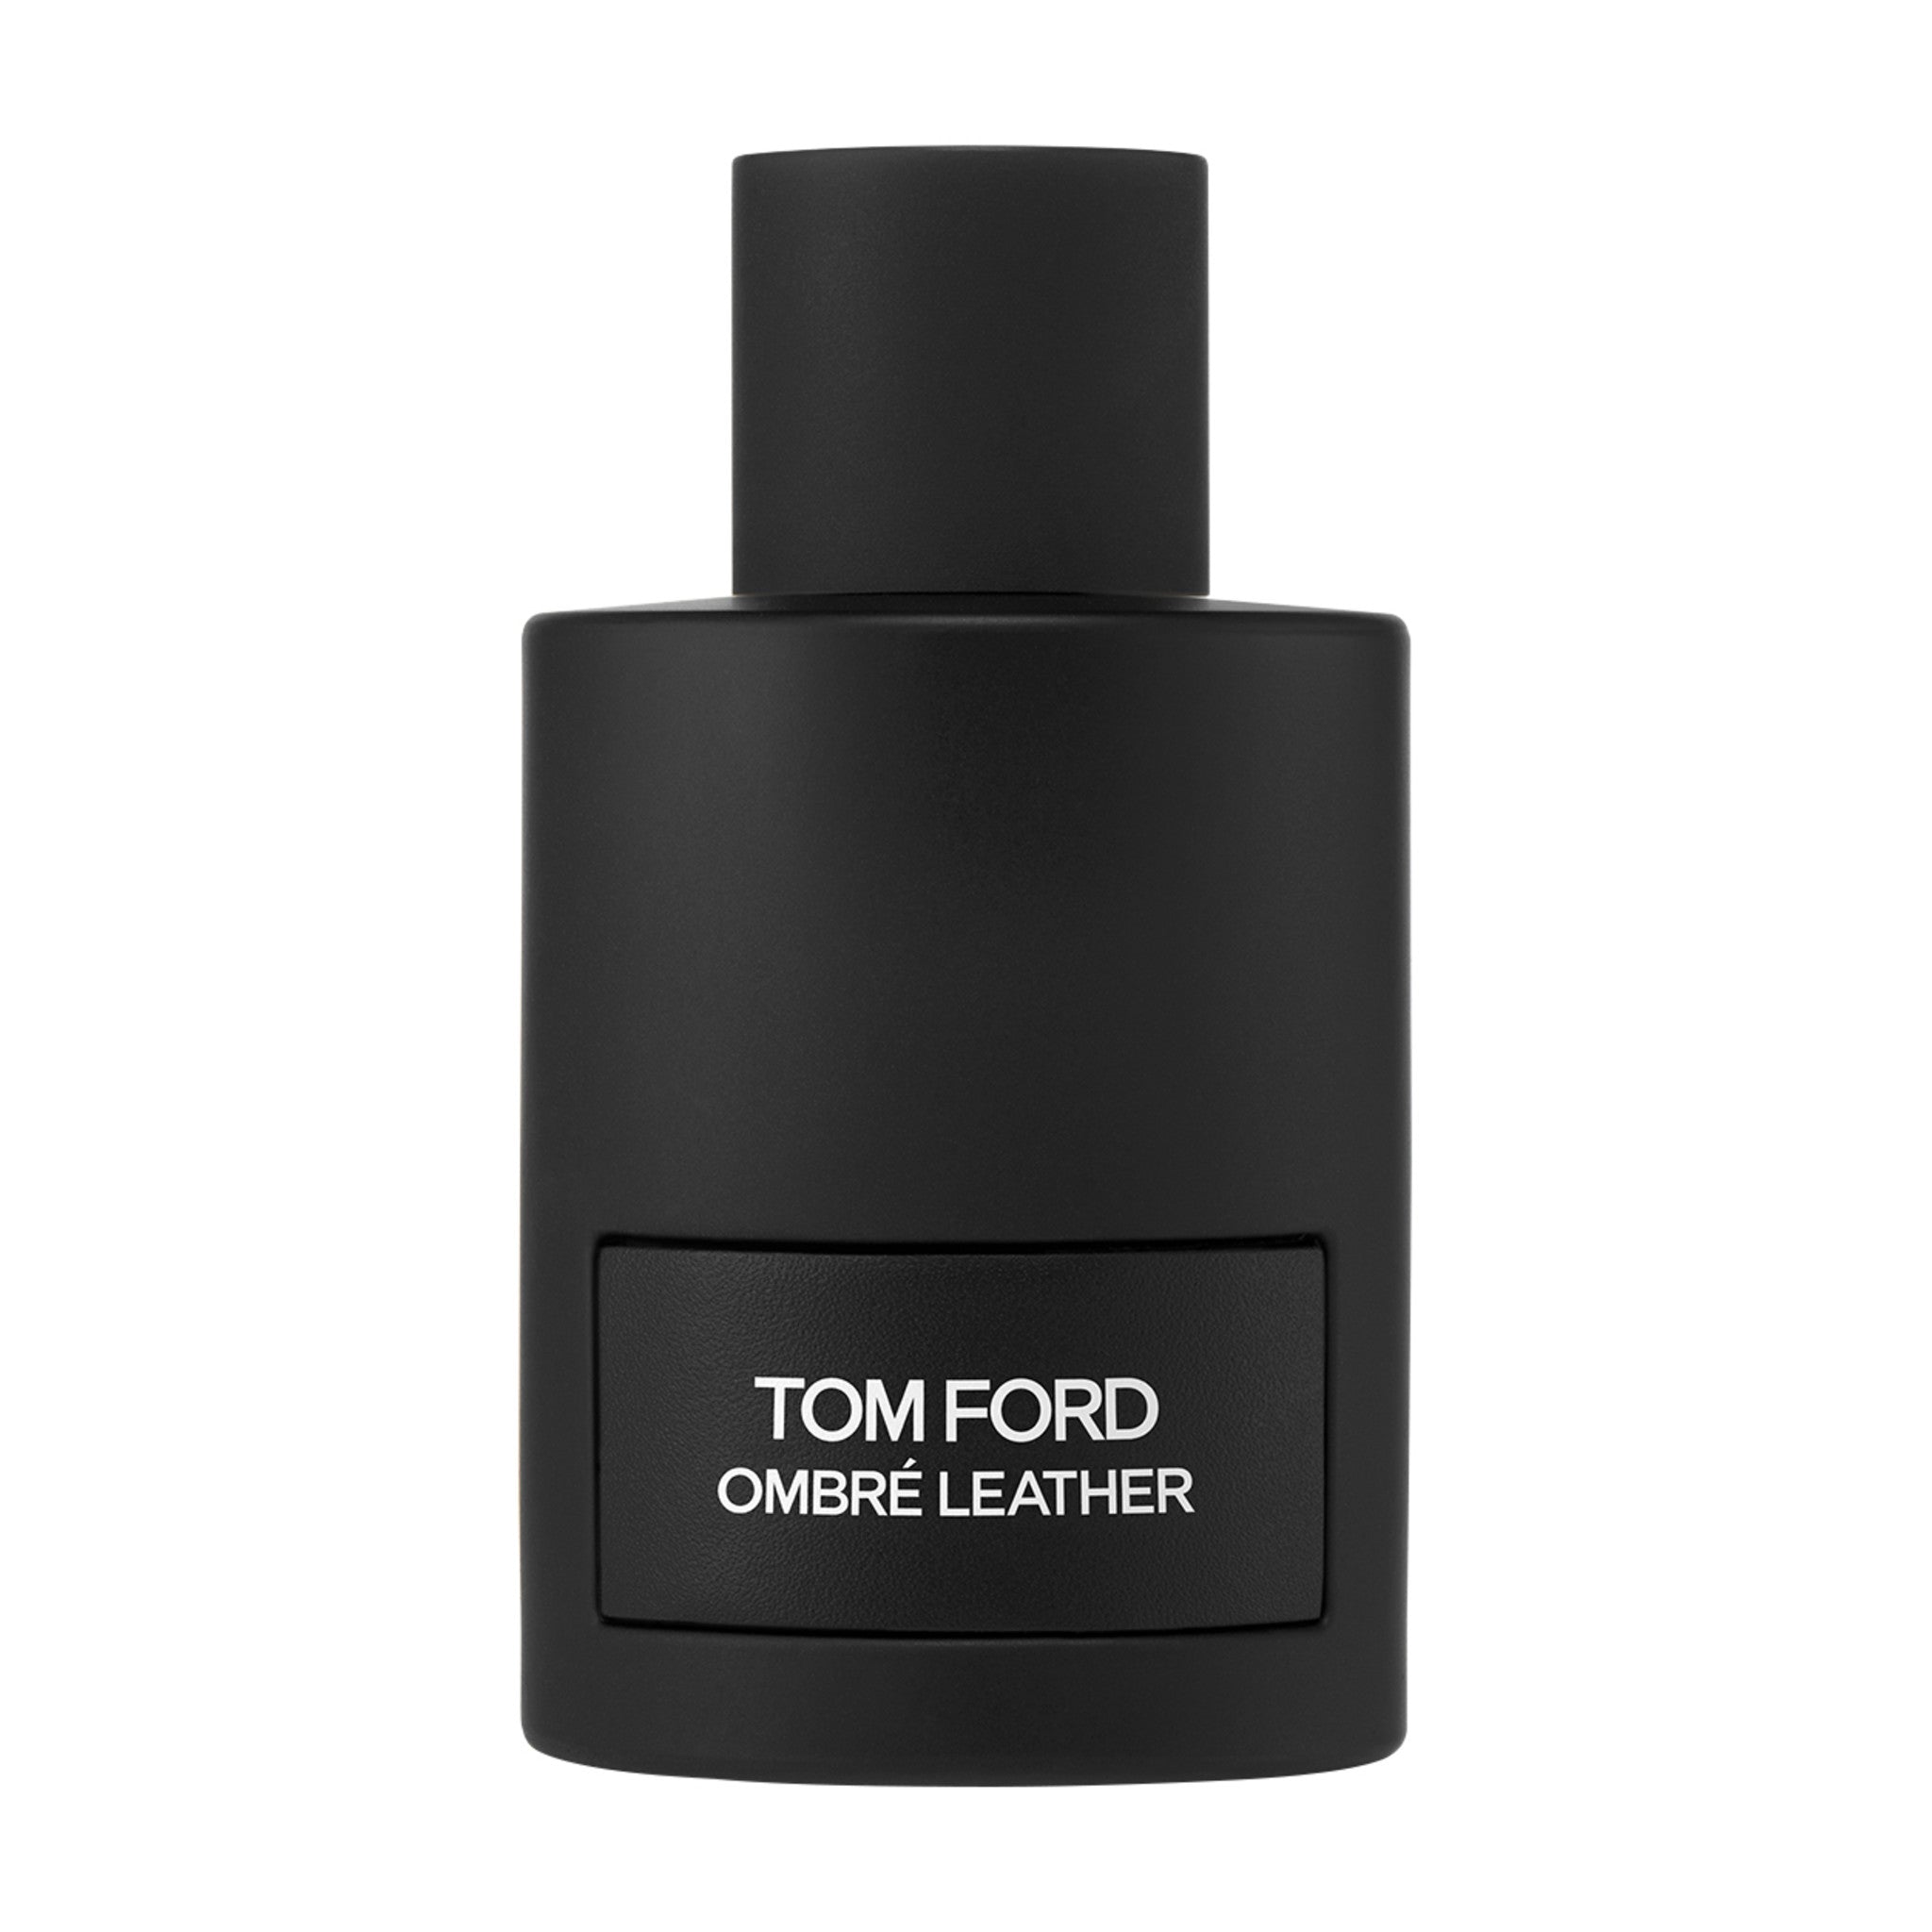 Tom Ford Ombre Leather Eau De Parfum Set with Travel Spray